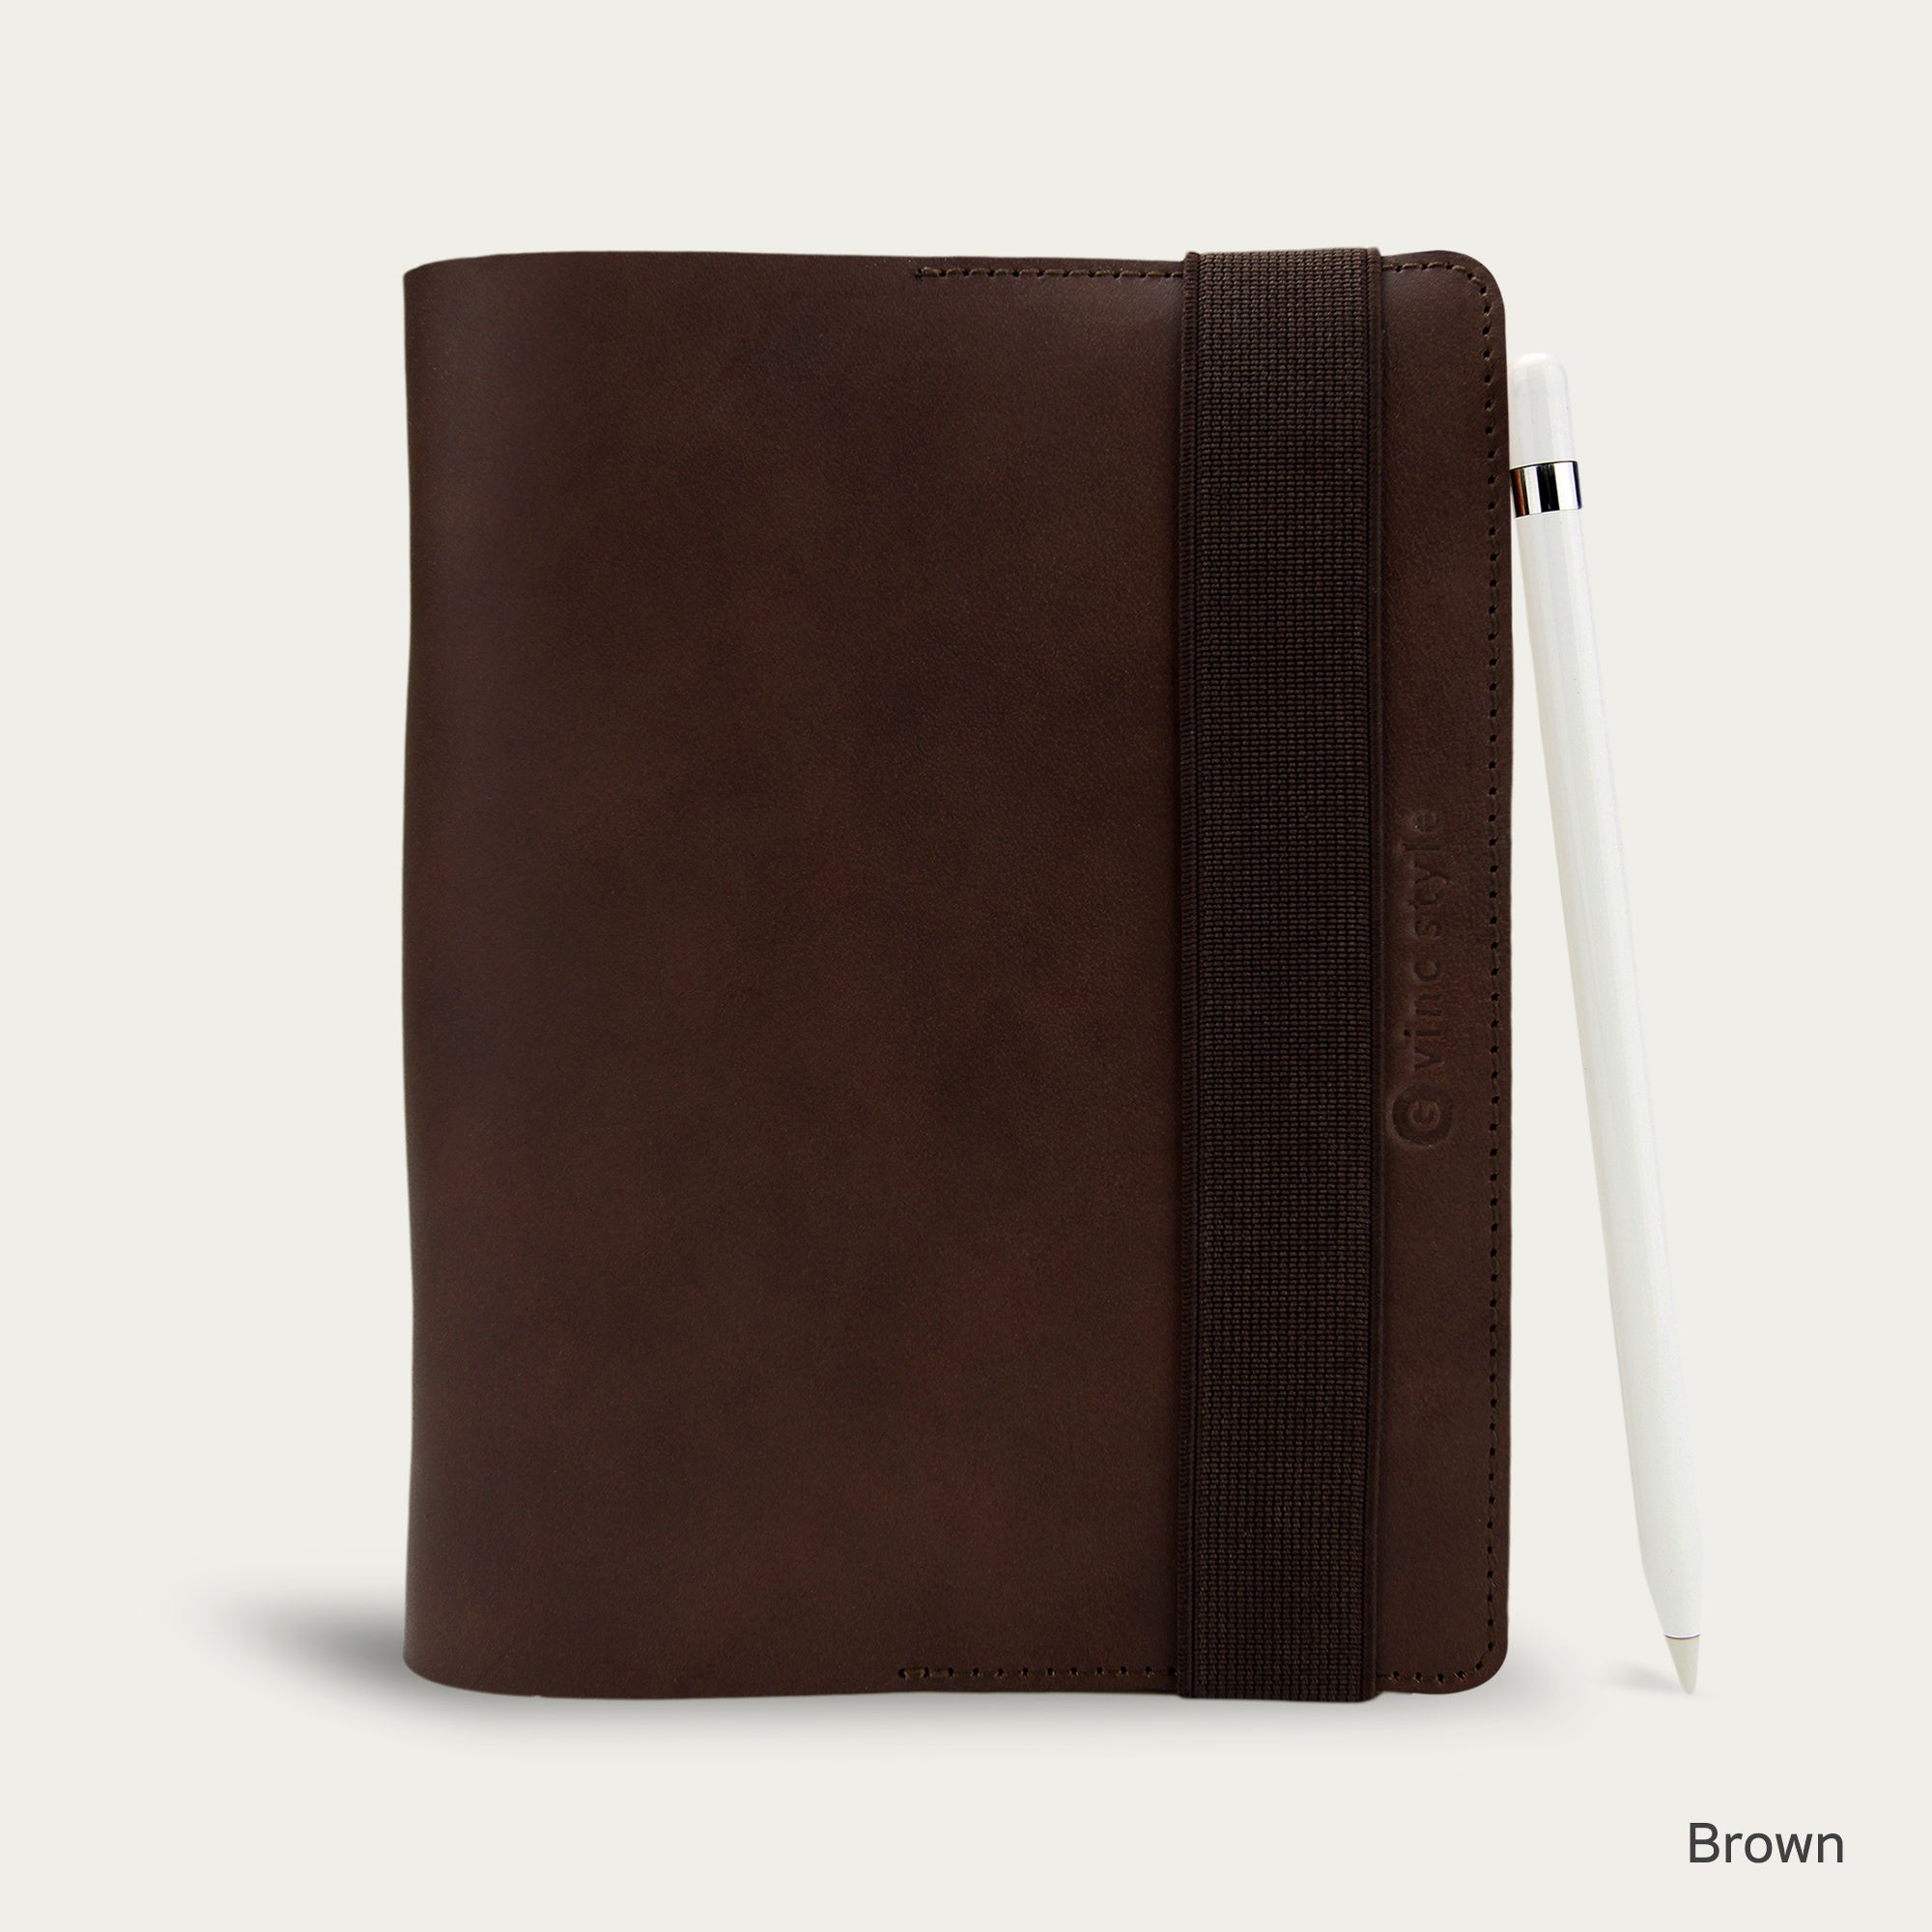 Leather Elastic Notebook (M) B6